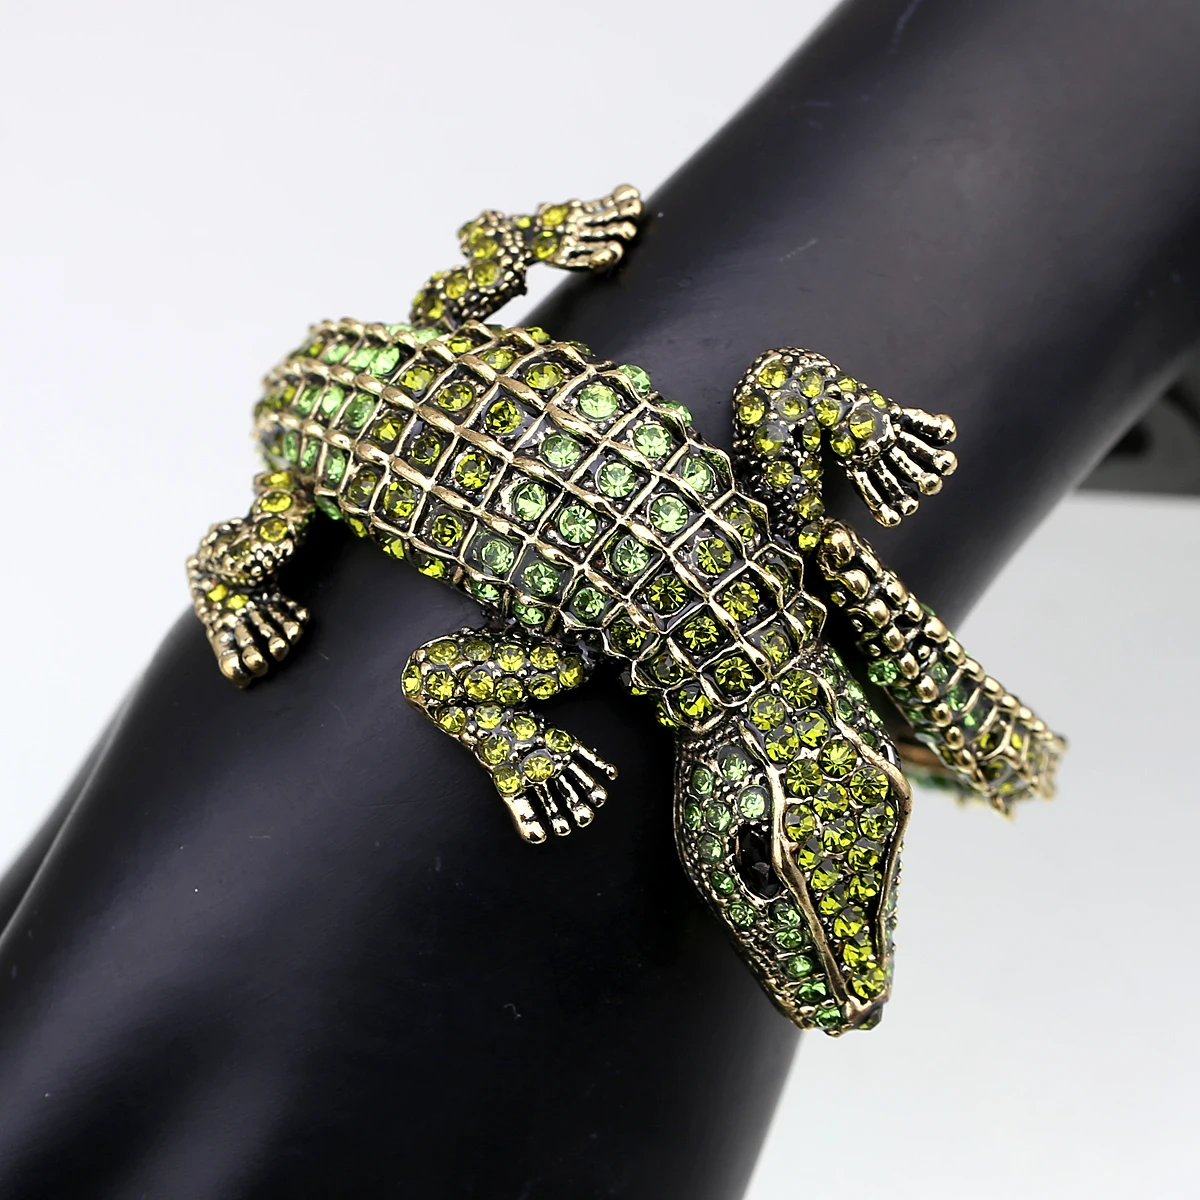 New Fashion Animal Style Vintage Crocodile Bangle Bracelet Antique Golden Plated Full Rhinestones Cuff Bangle Jewelry 4 Colors images - 6